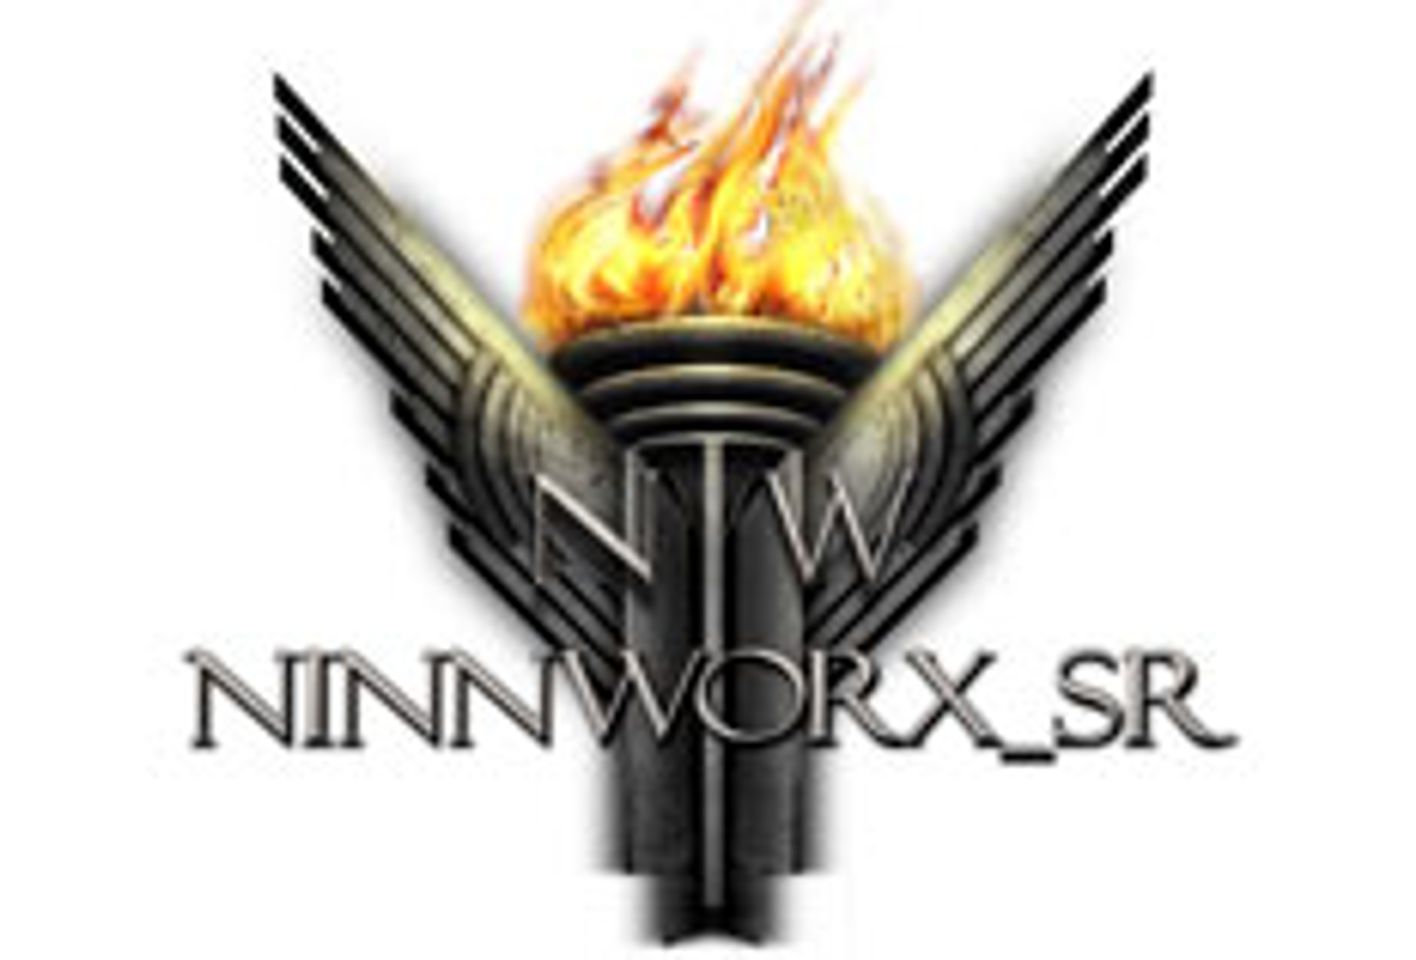 NinnWorx_SR Ships Nick Manning Comp